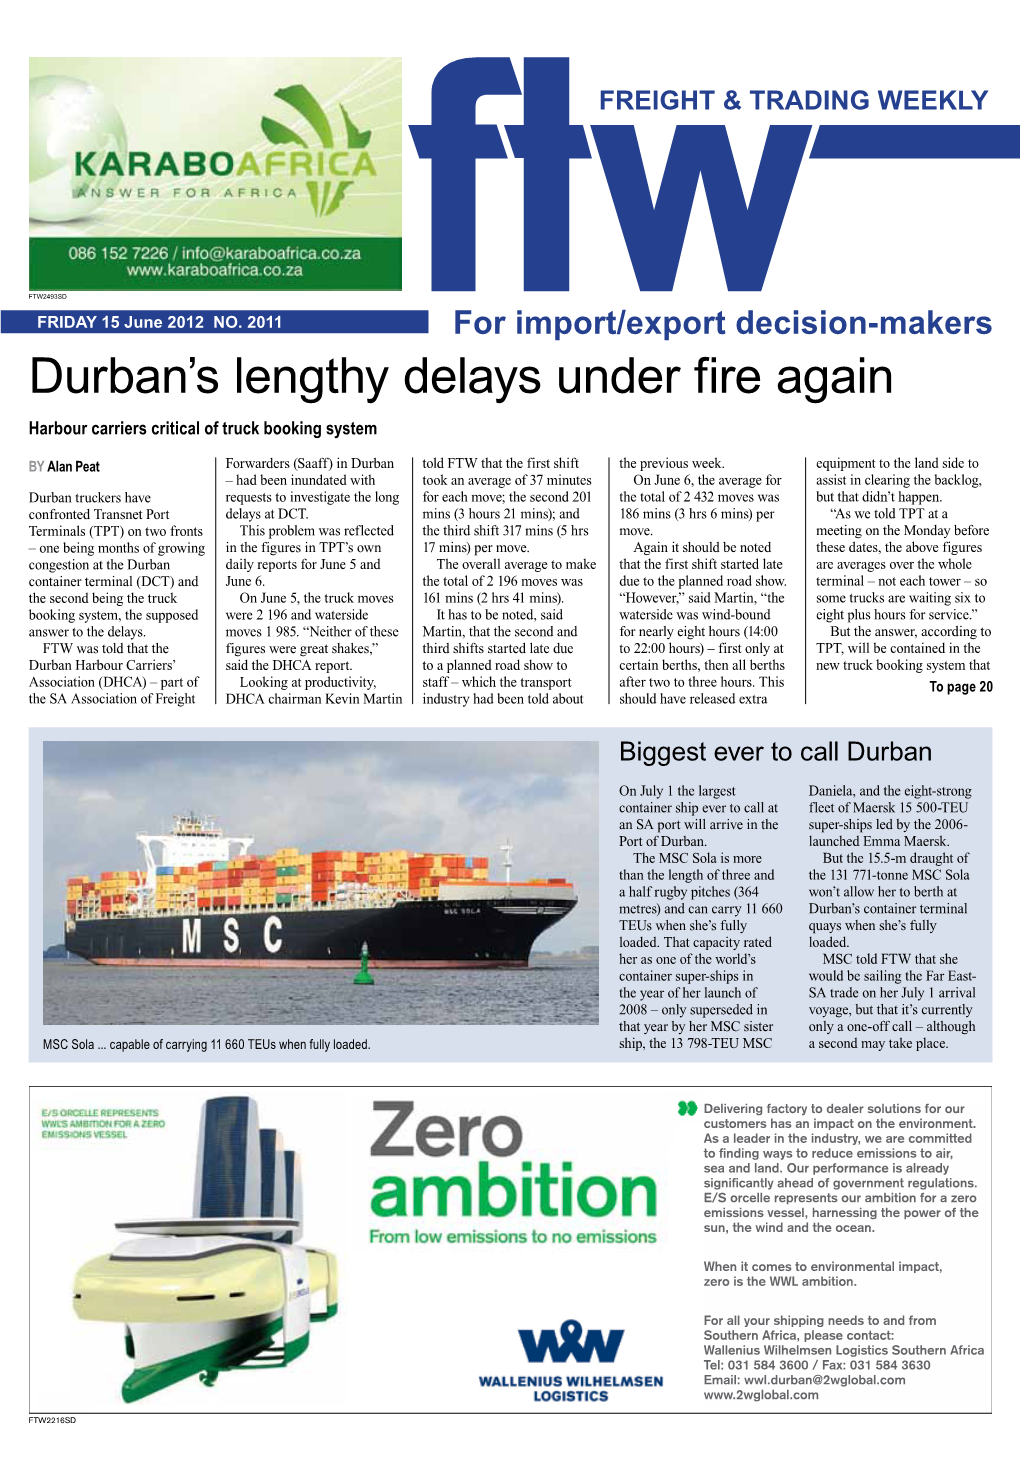 Durban's Lengthy Delays Under Fire Again